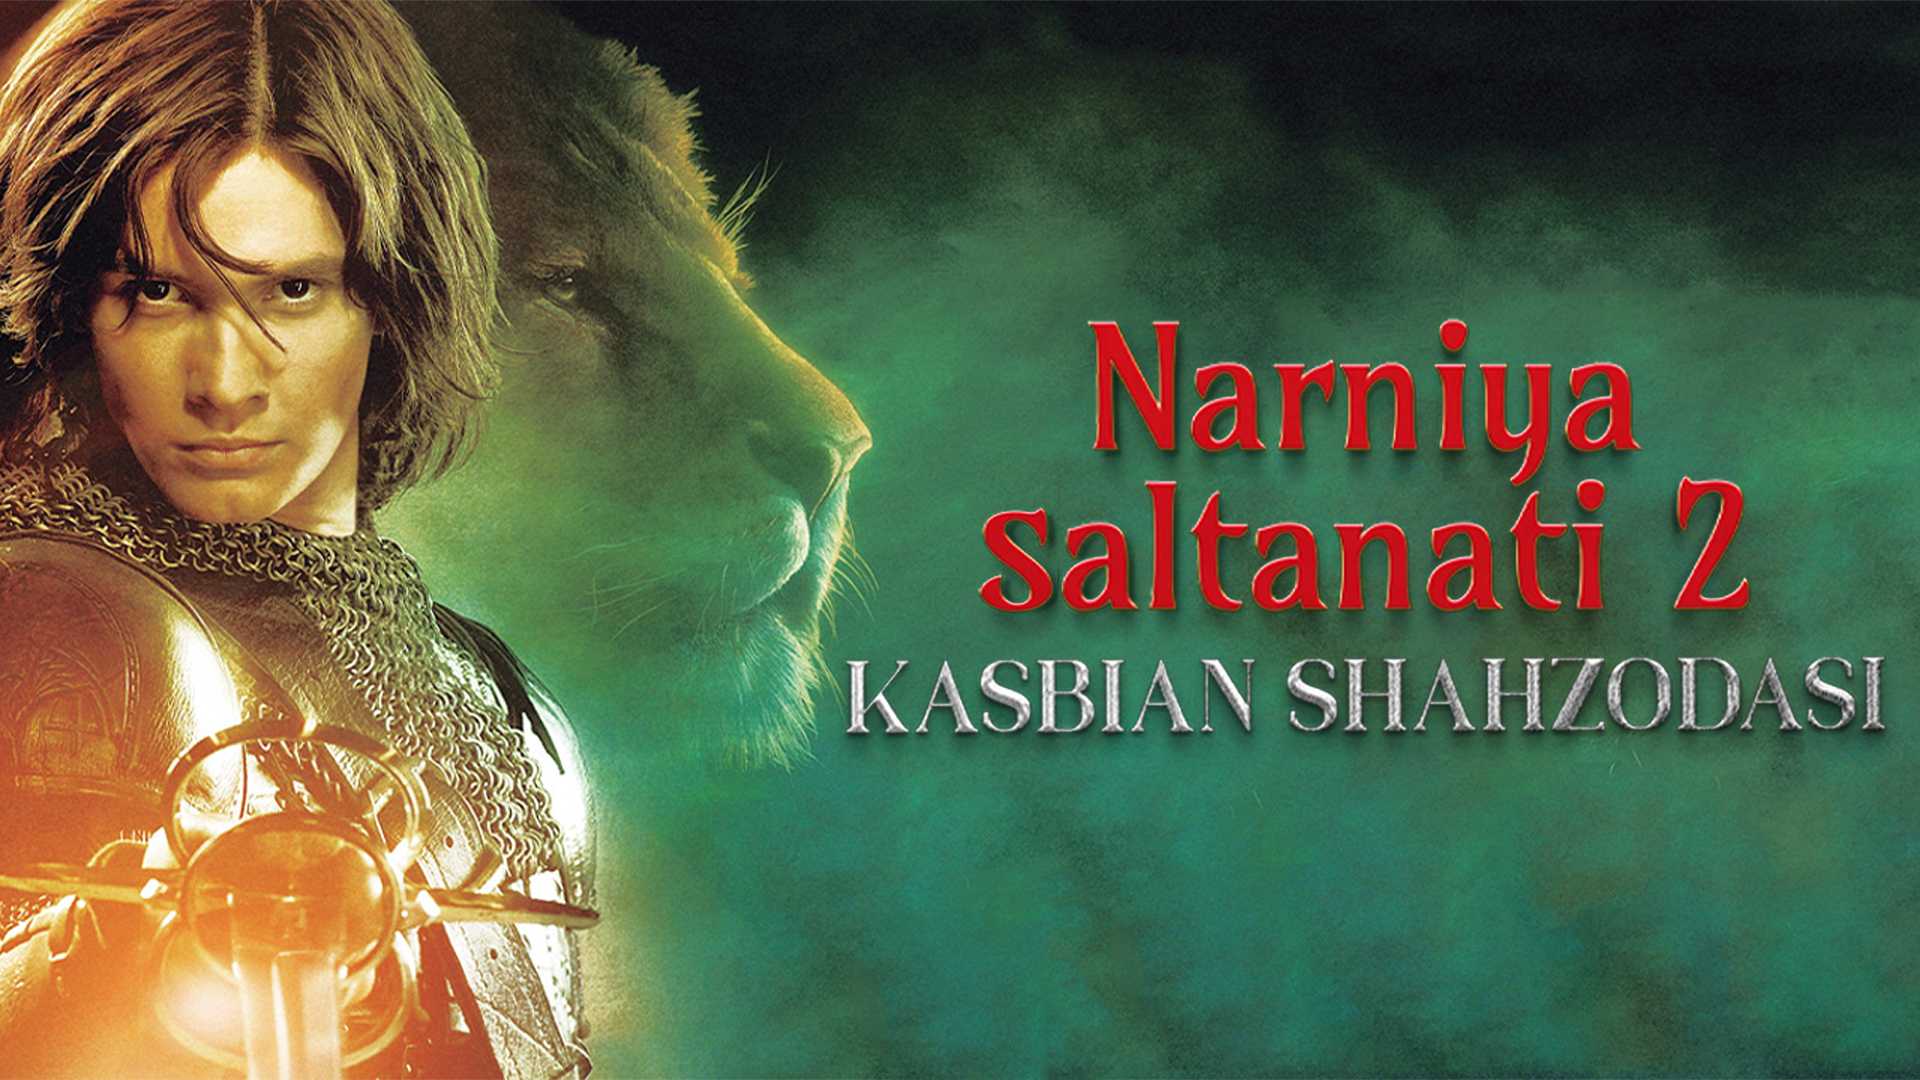 Narniya saltanati 2 - Kasbian shahzodasi